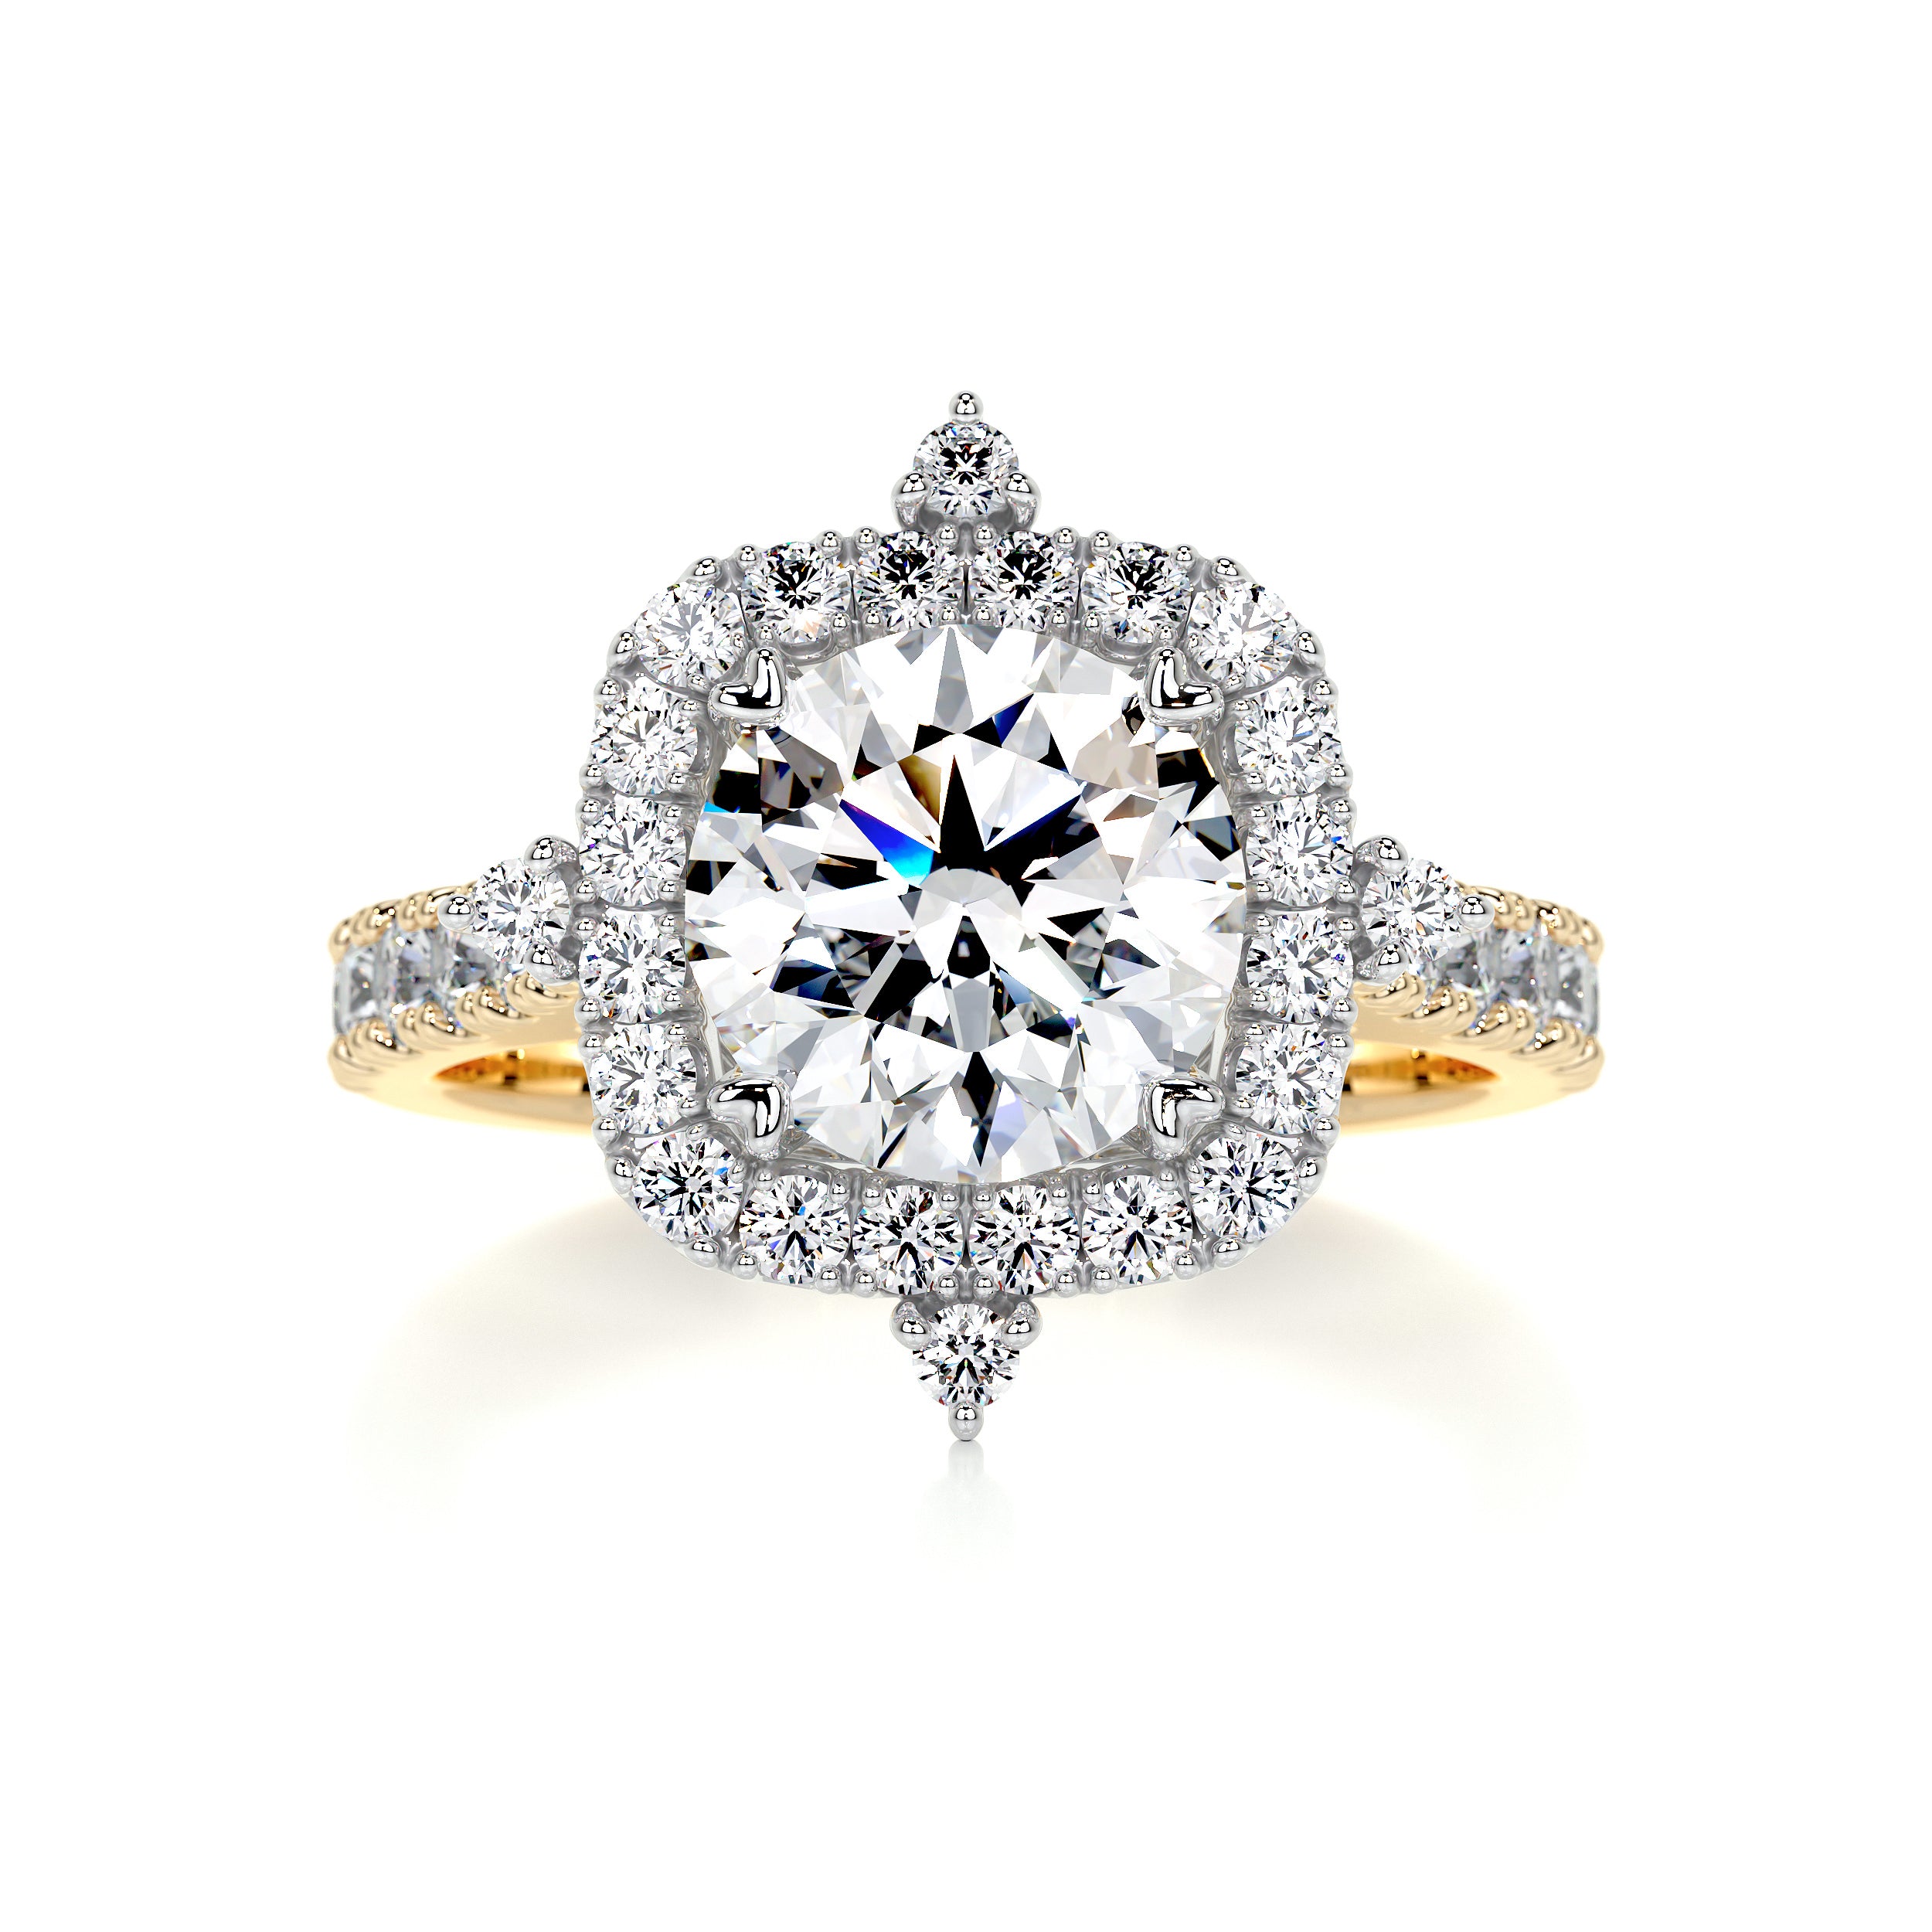 Francesca Diamond Engagement Ring   (2 Carat) -18K Yellow Gold